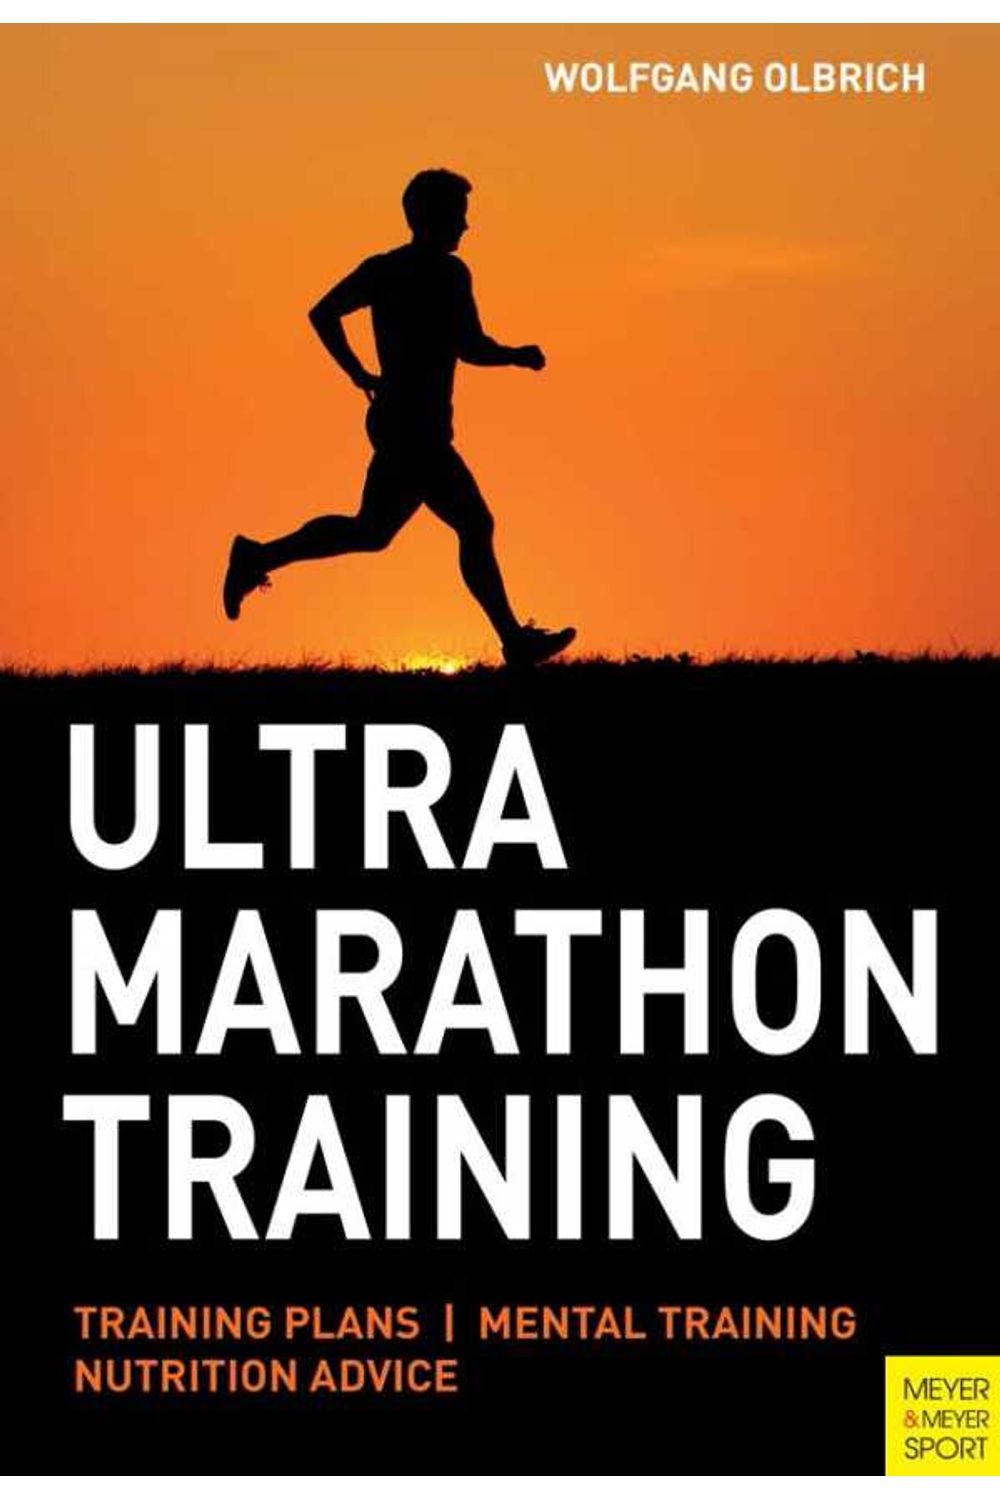 bw-ultra-marathon-training-meyer-meyer-sport-9781841268330